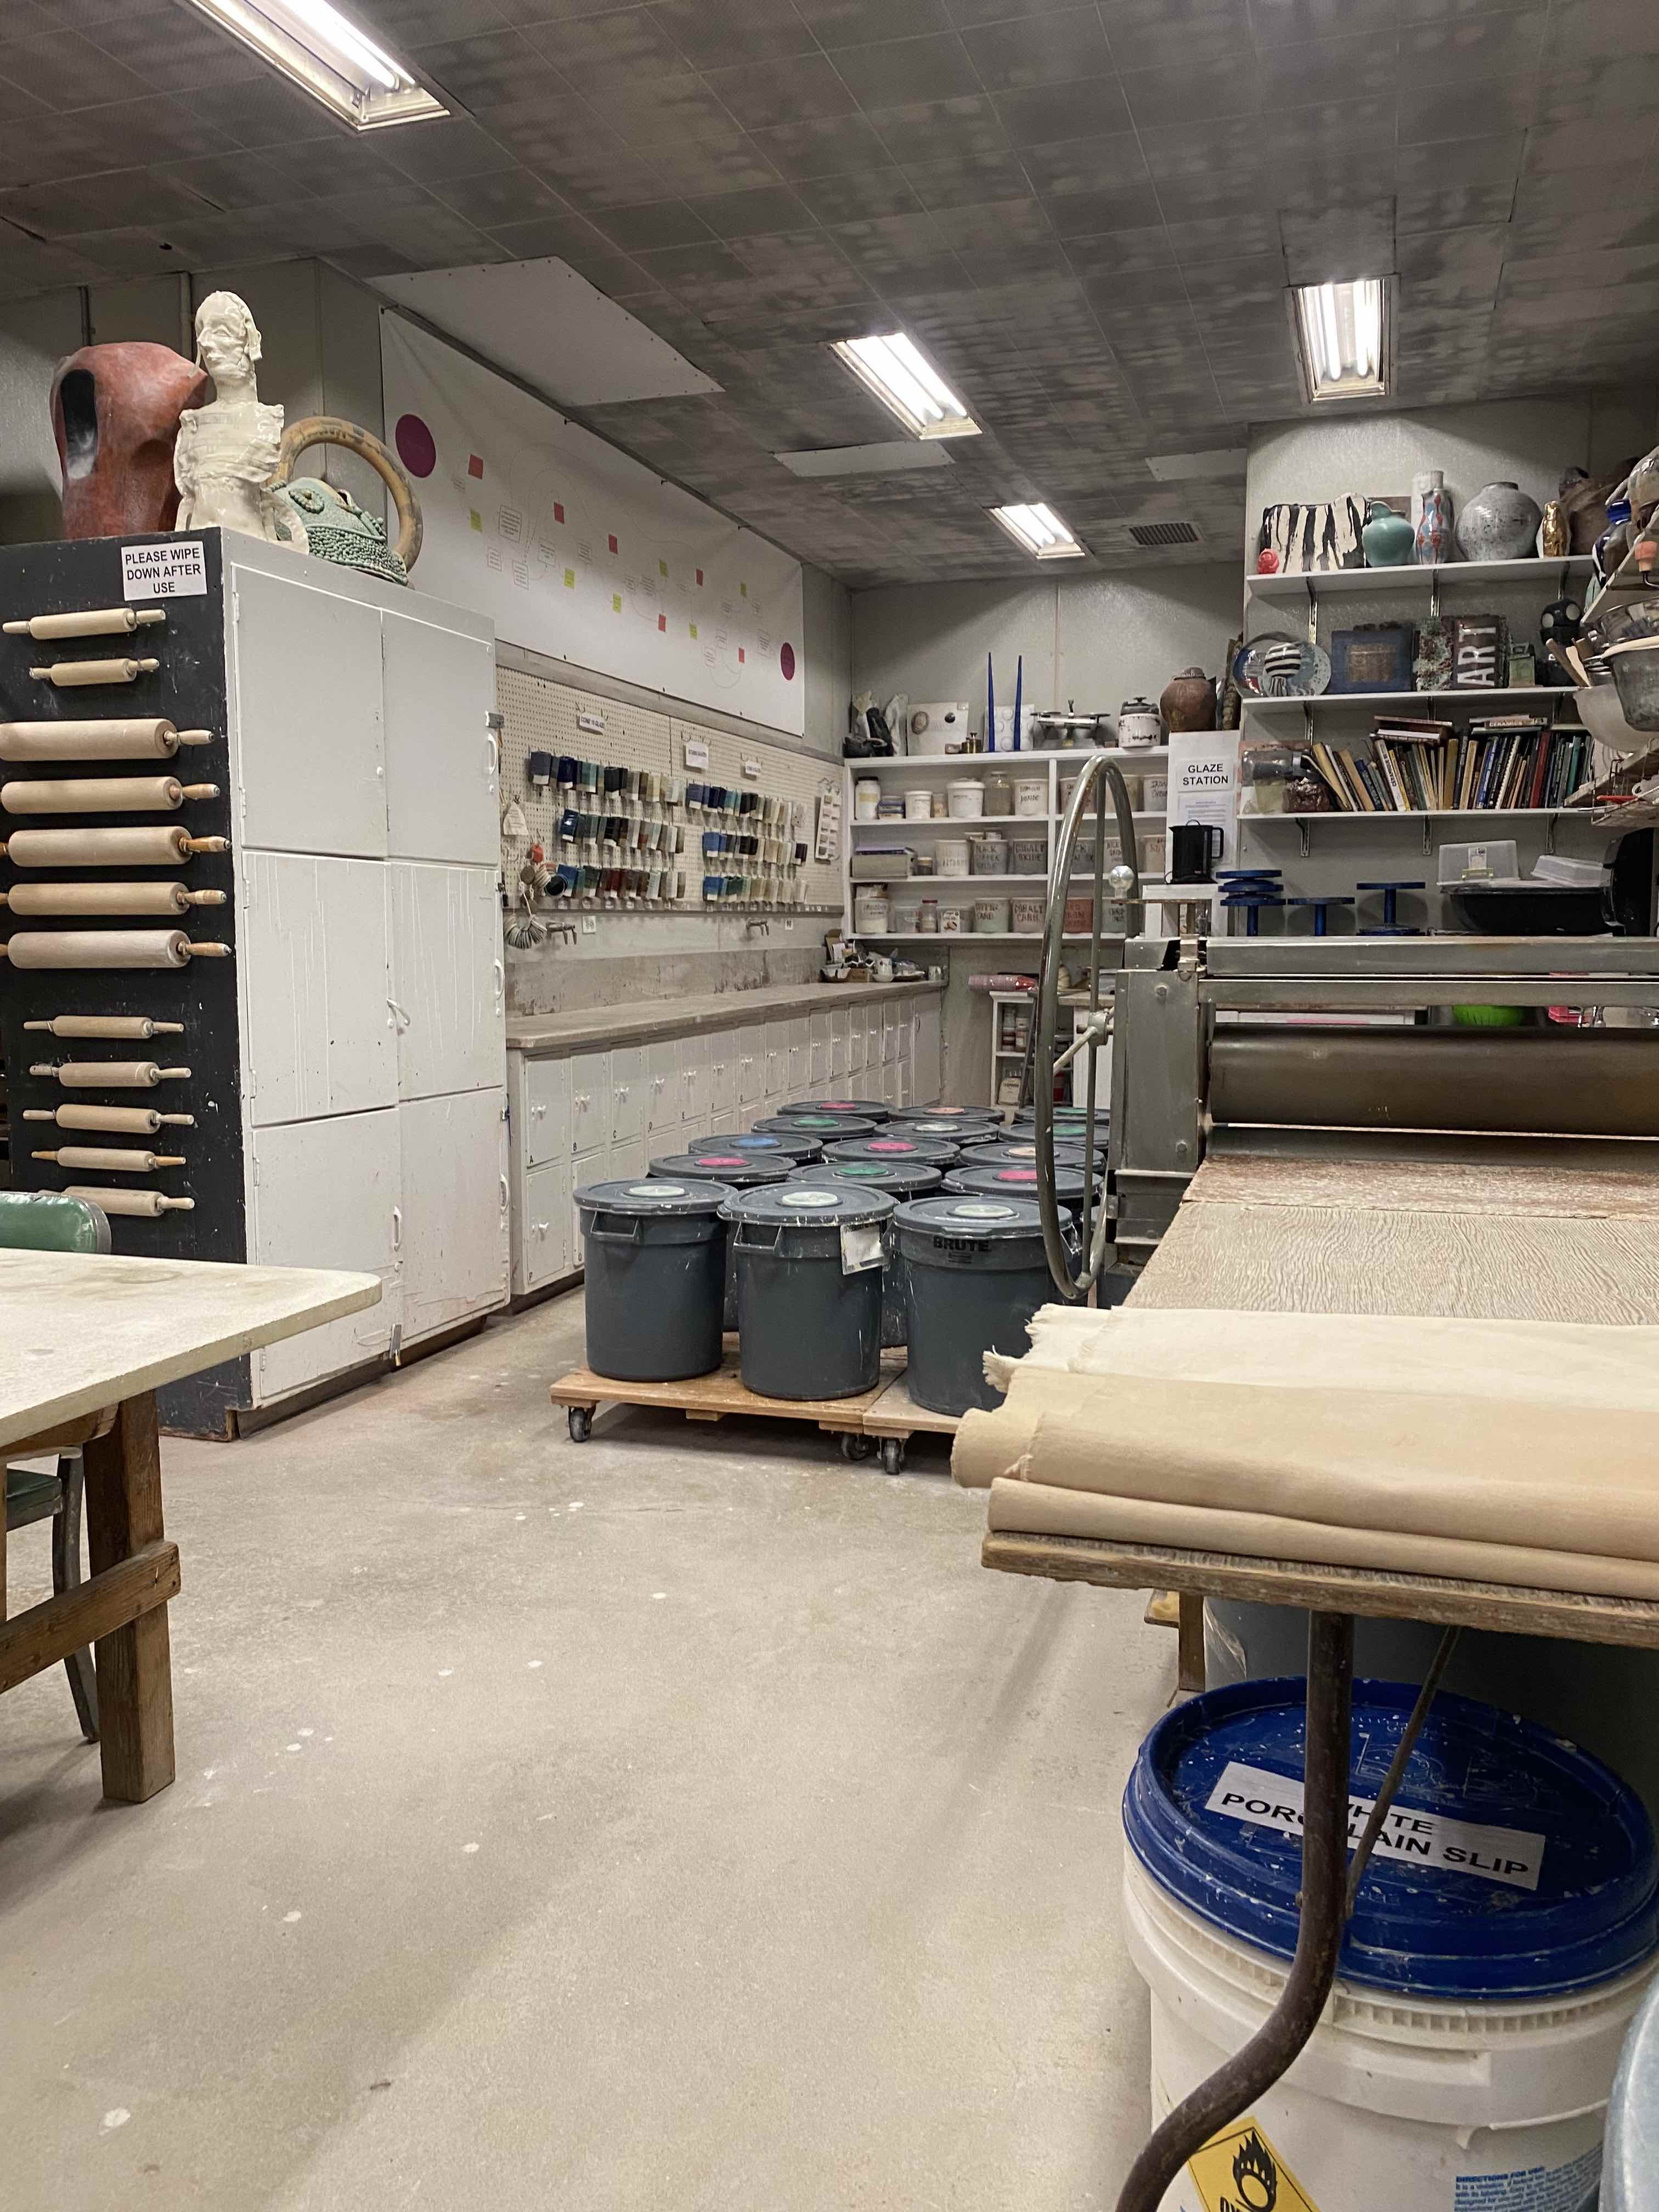 This image depicts the ceramics equipment room